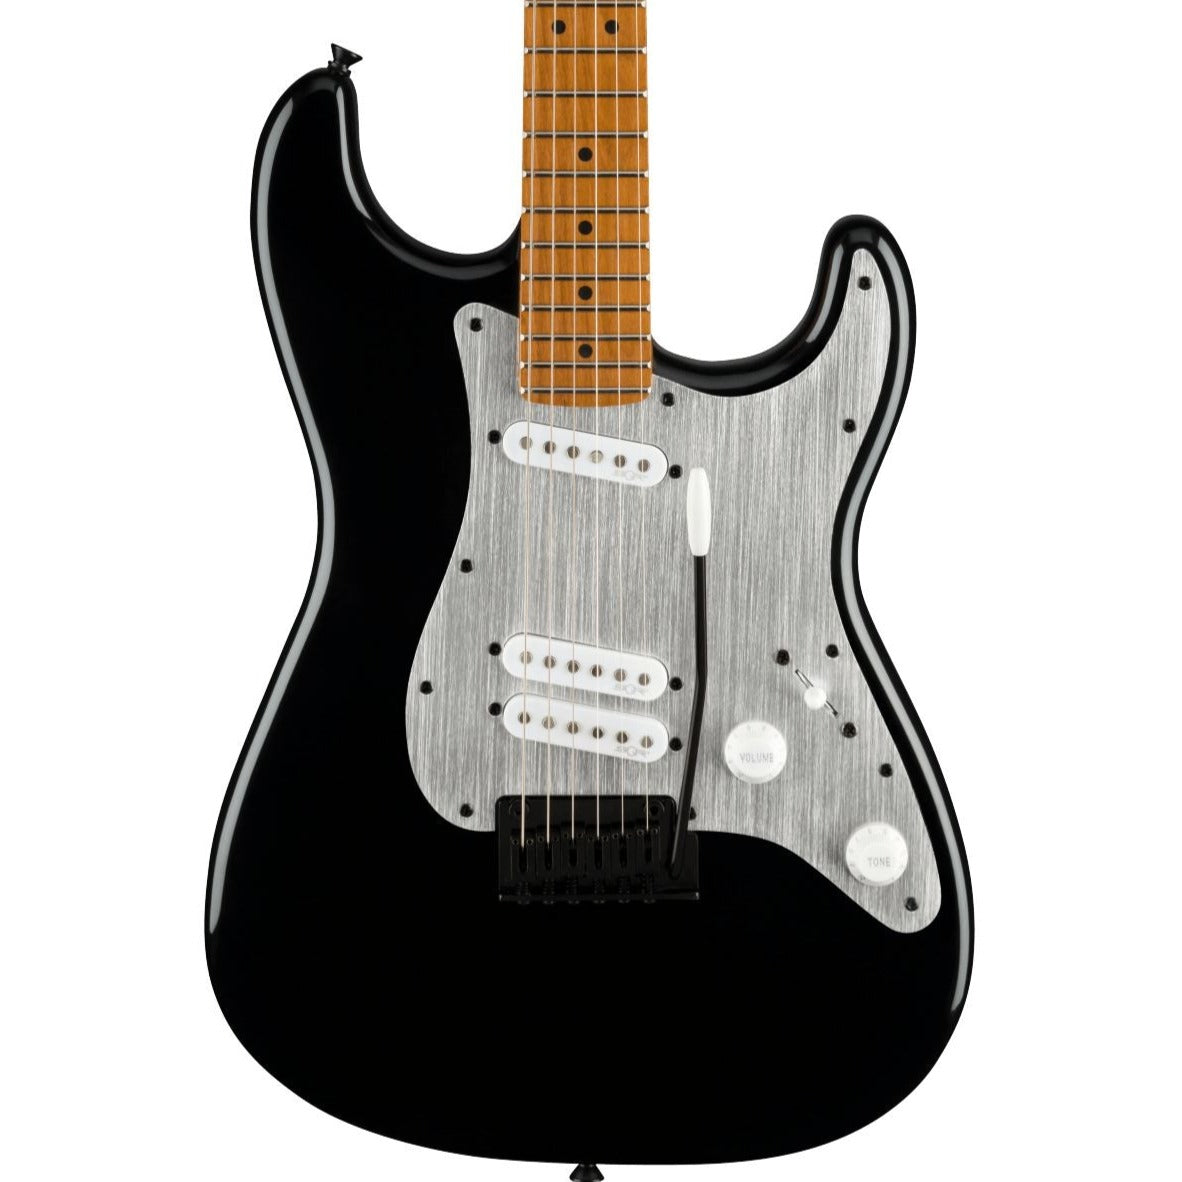 Squier Contemporary Stratocaster Special, Black